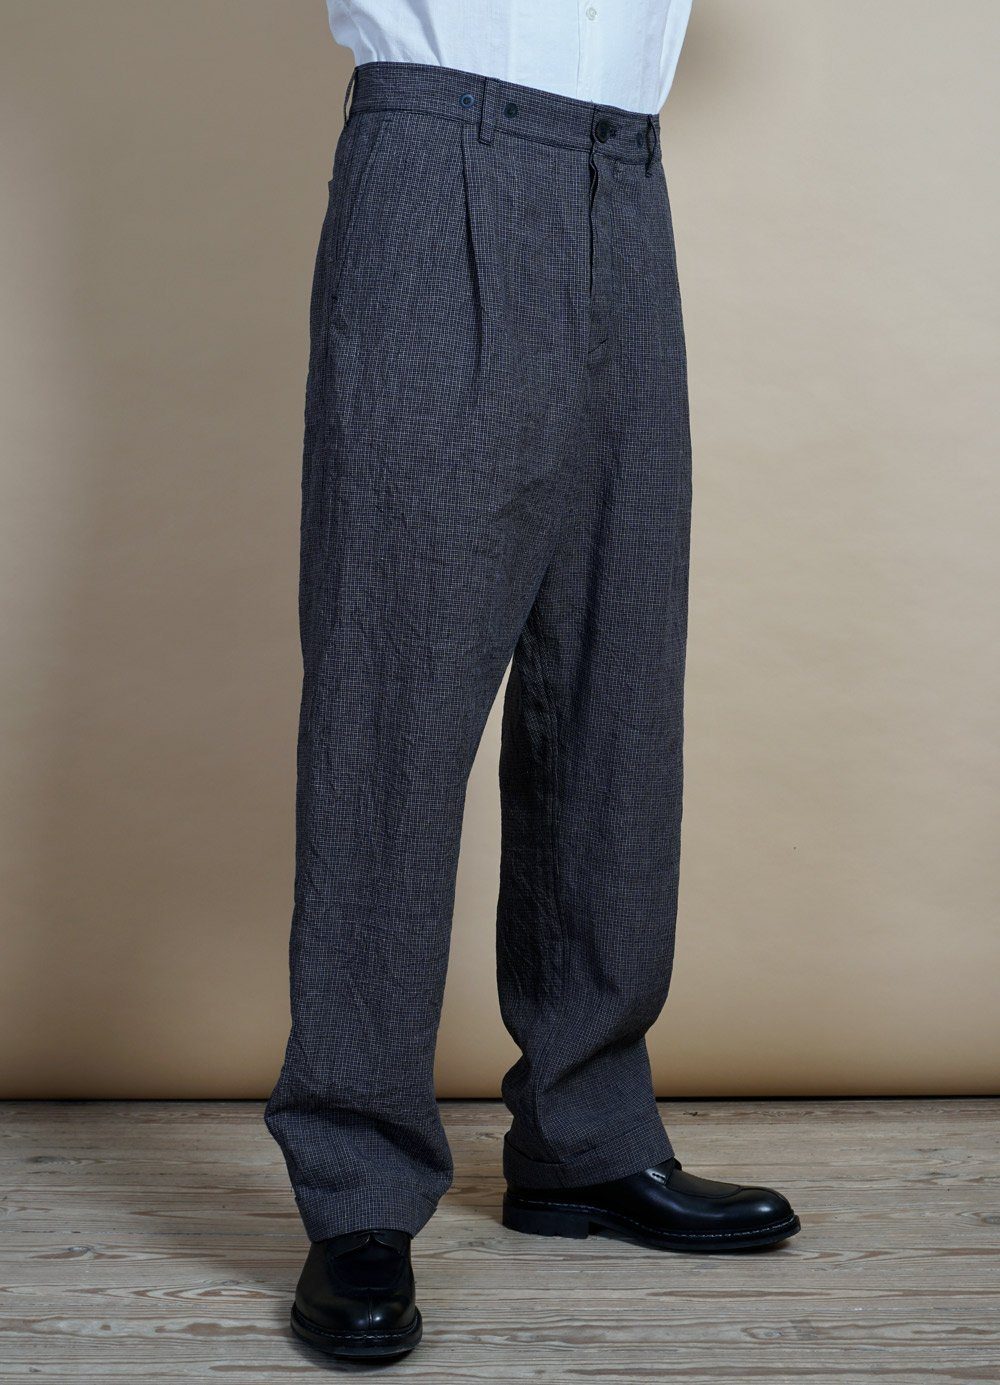 HANSEN GARMENTS - SUNE | Pleated Wide Cut Trousers | River - HANSEN Garments